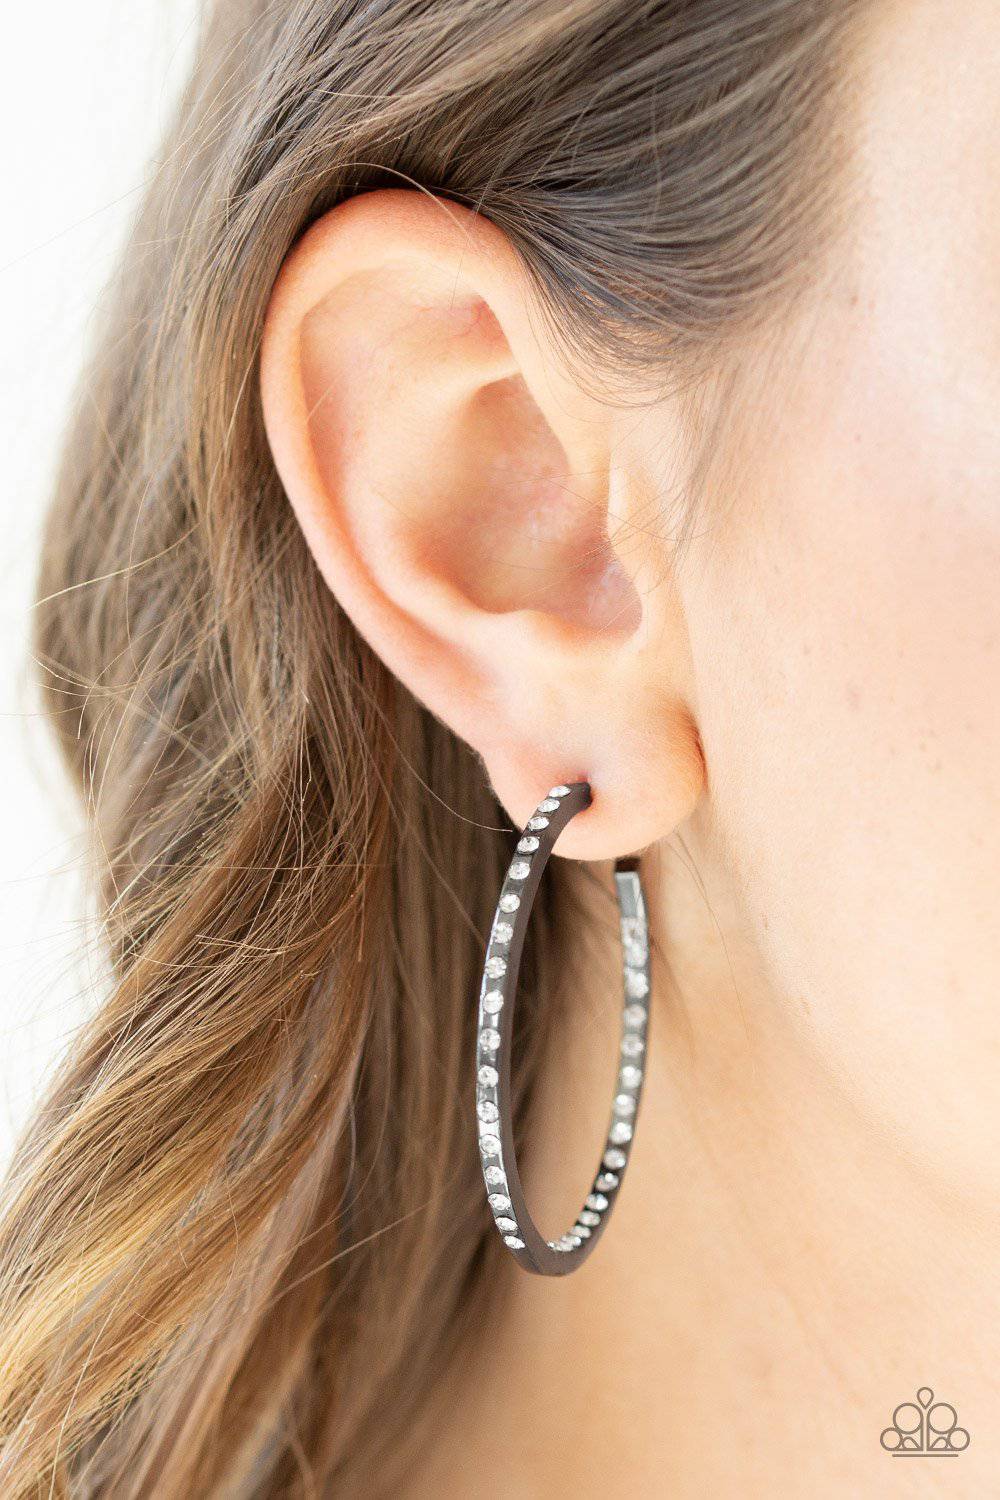 Comin Into Money - Black Rhinestone Earrings - Paparazzi Accessories - GlaMarous Titi Jewels